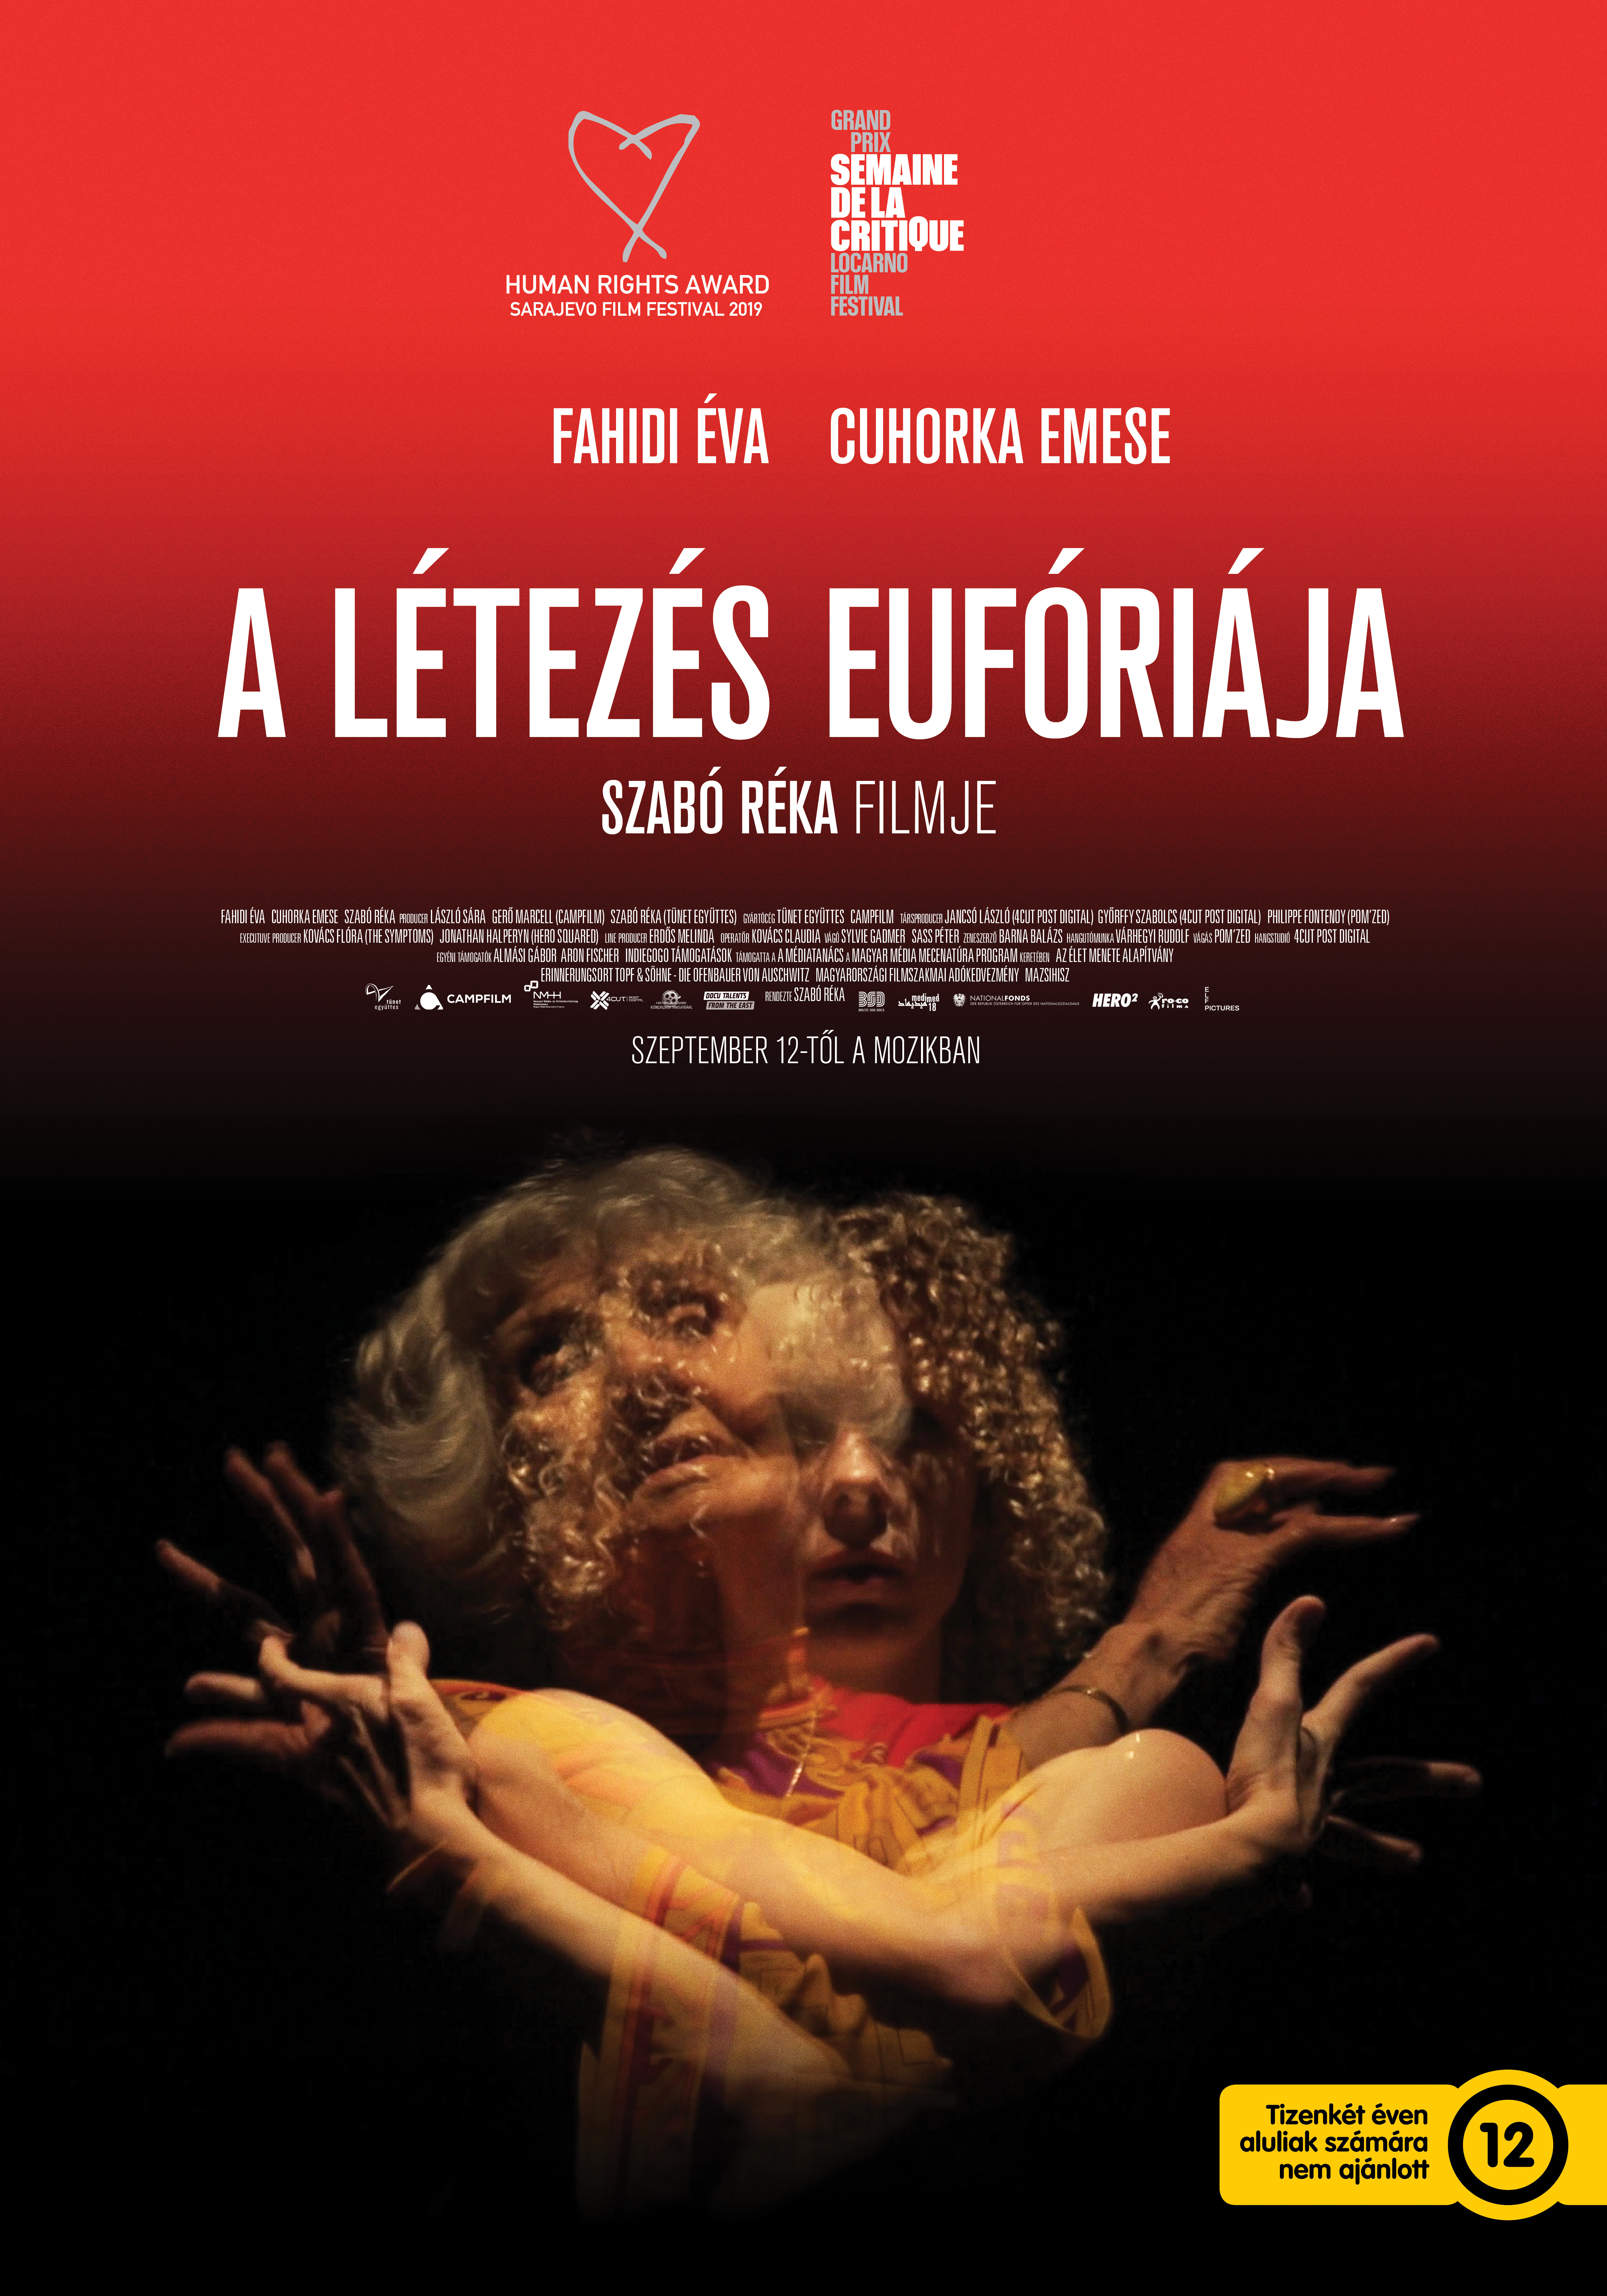 A Letezes Euforiaja Dokumentumfilm Szeged